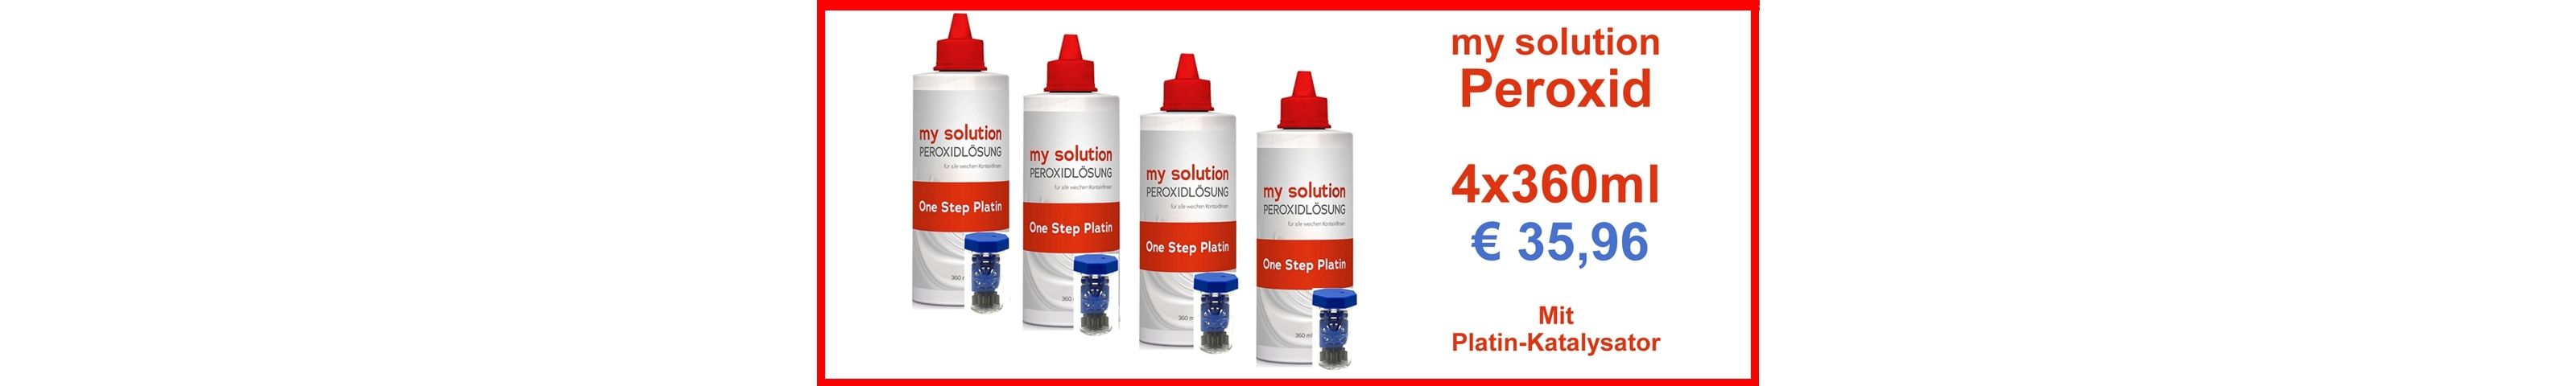 Startseite Banner: my solution peroxid